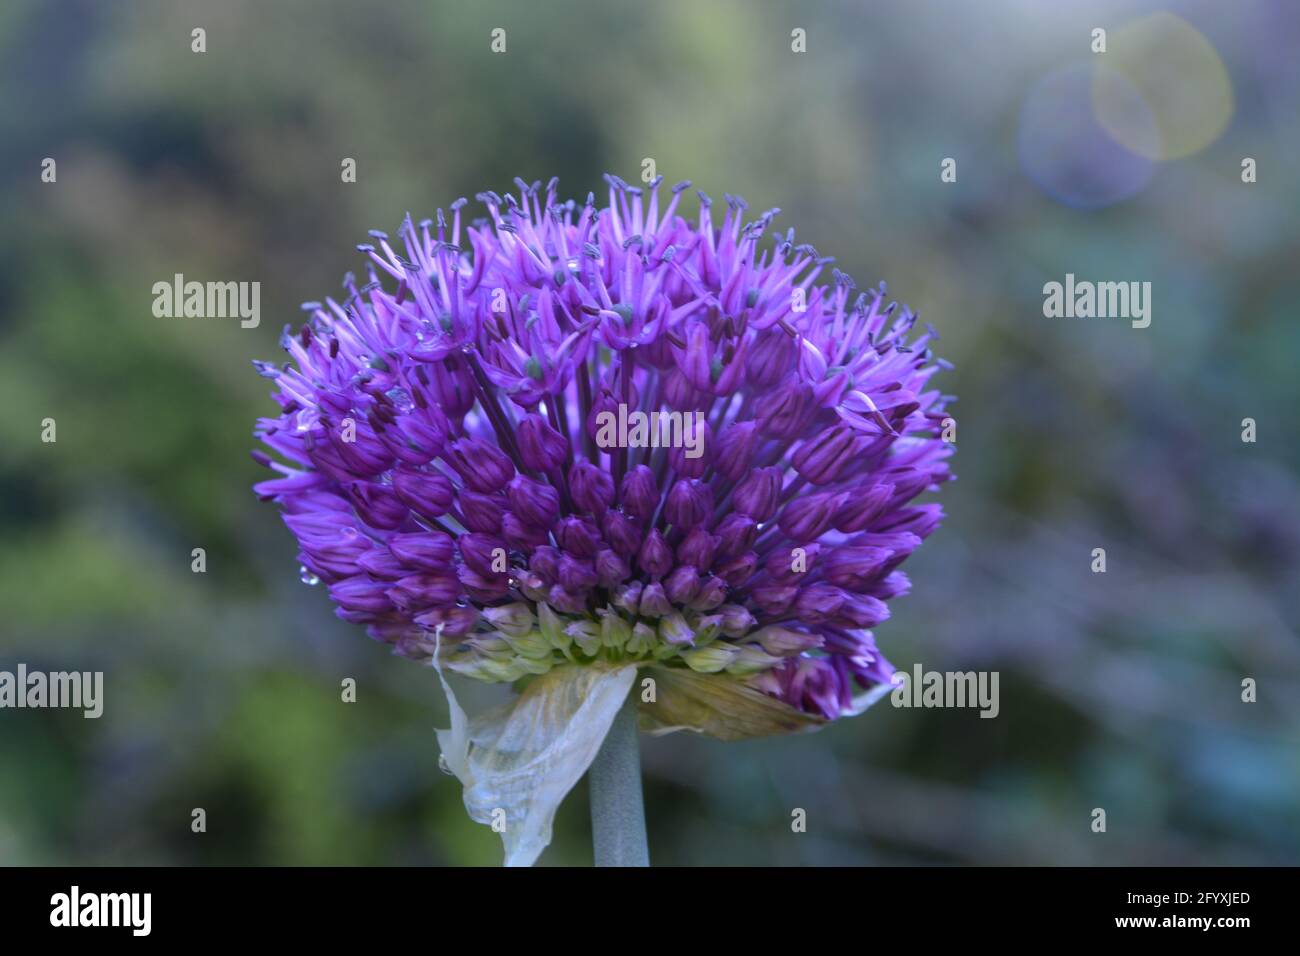 Allium Gladiator, Flower Cambridge UK, spazio floreale puramente bello e tranquillo Foto Stock